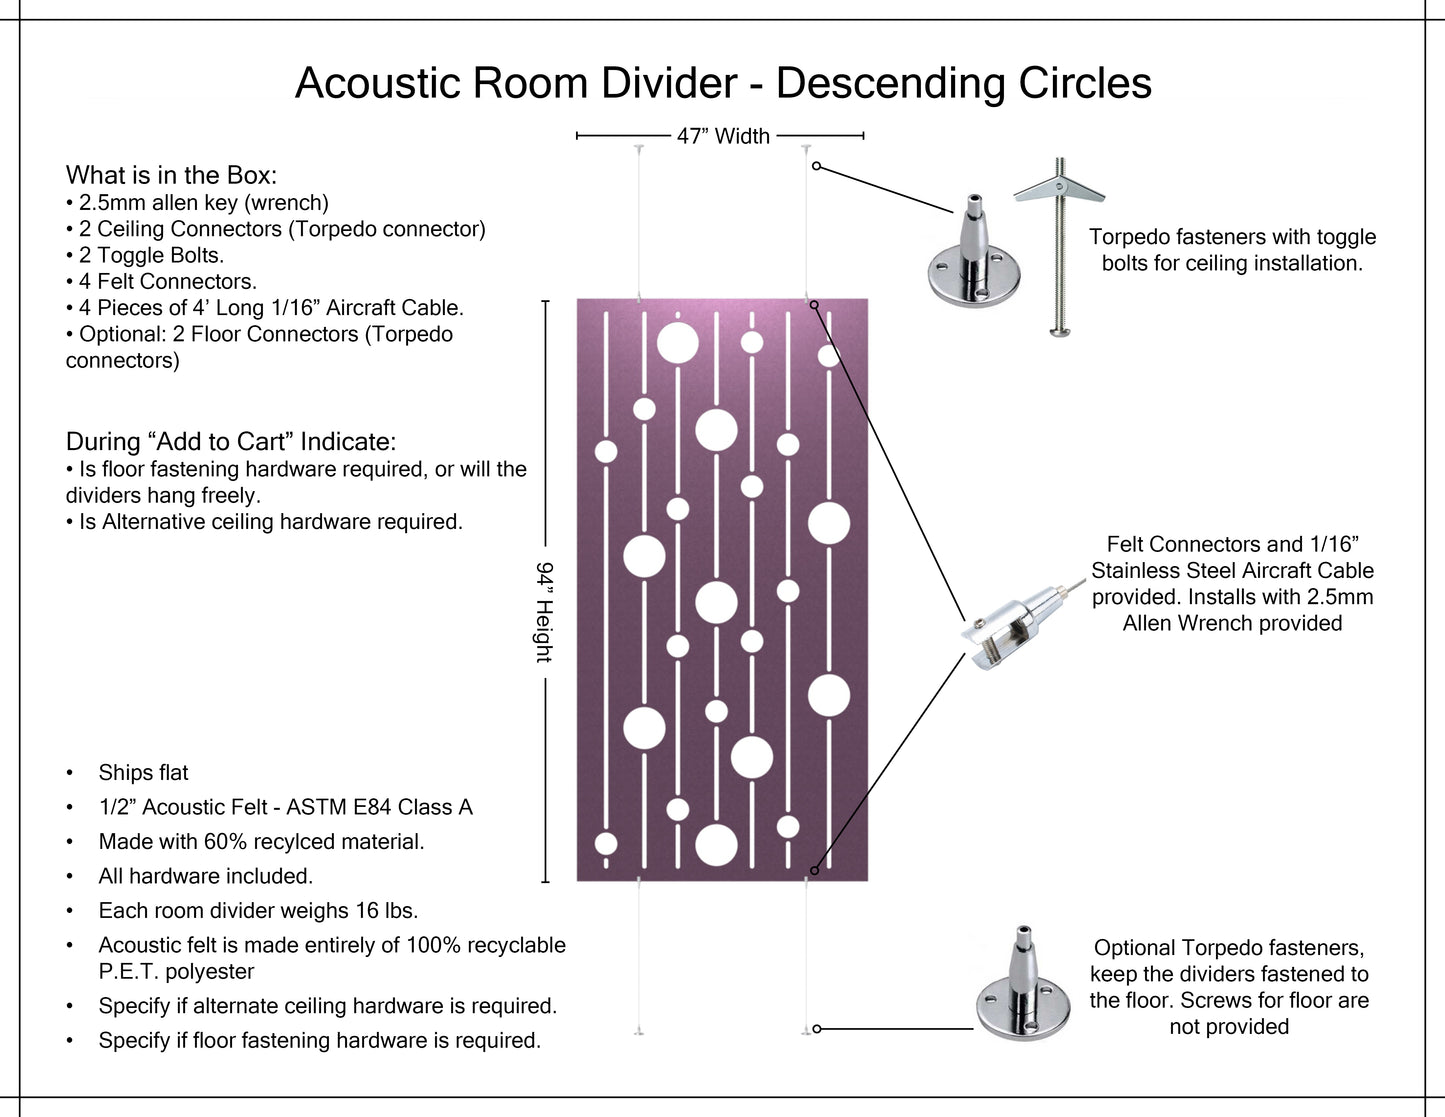 4x8 Acoustic Room Divider - Descending Circles